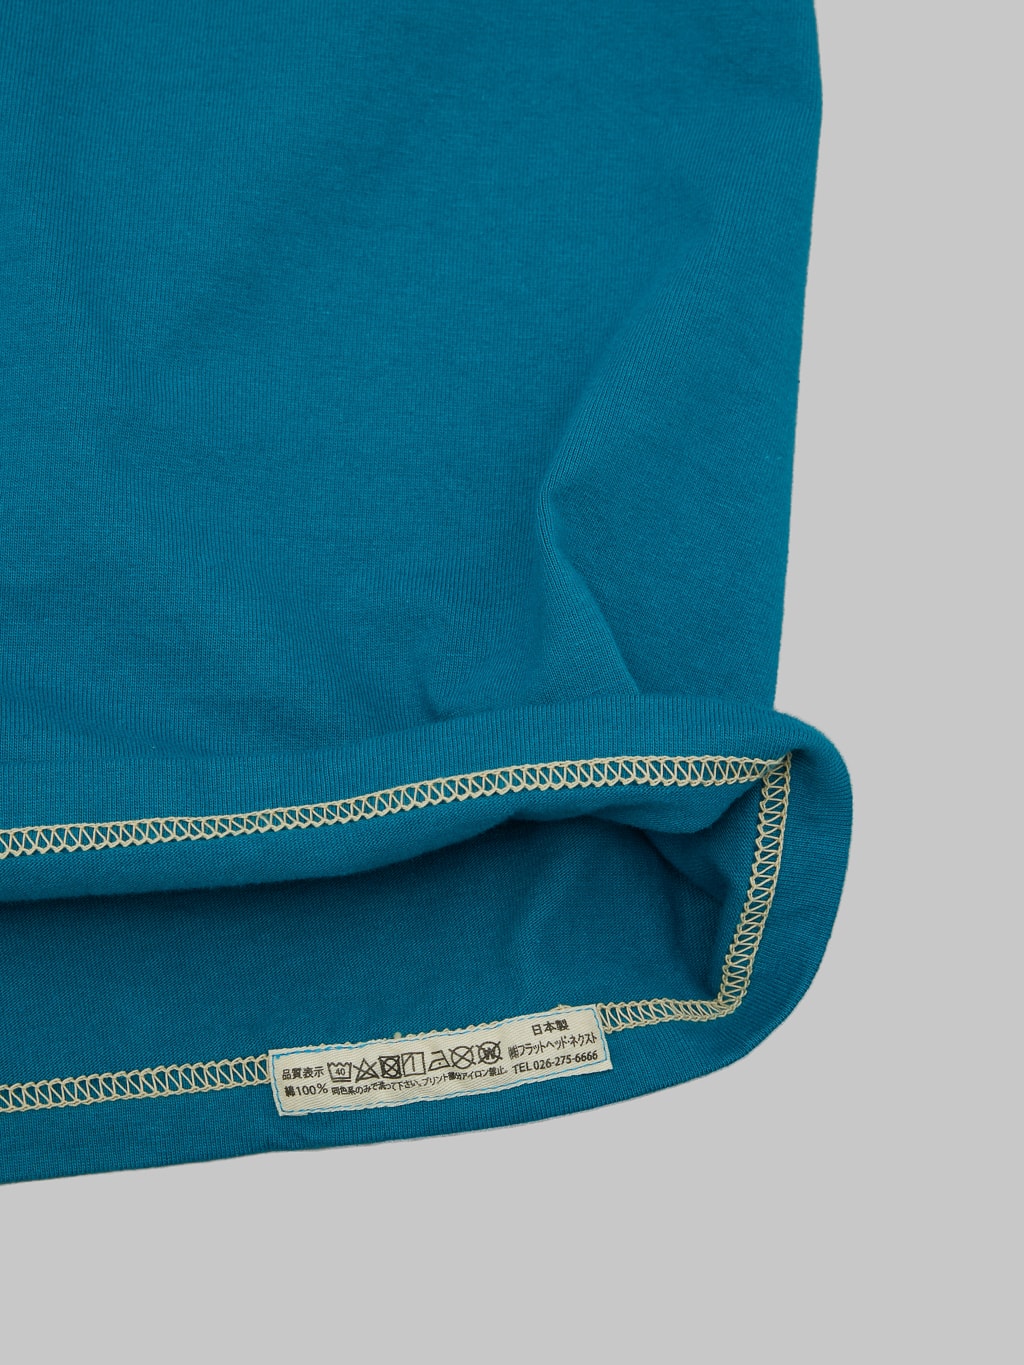 The Flat Head Plain Heavyweight TShirt turquoise fabric interior